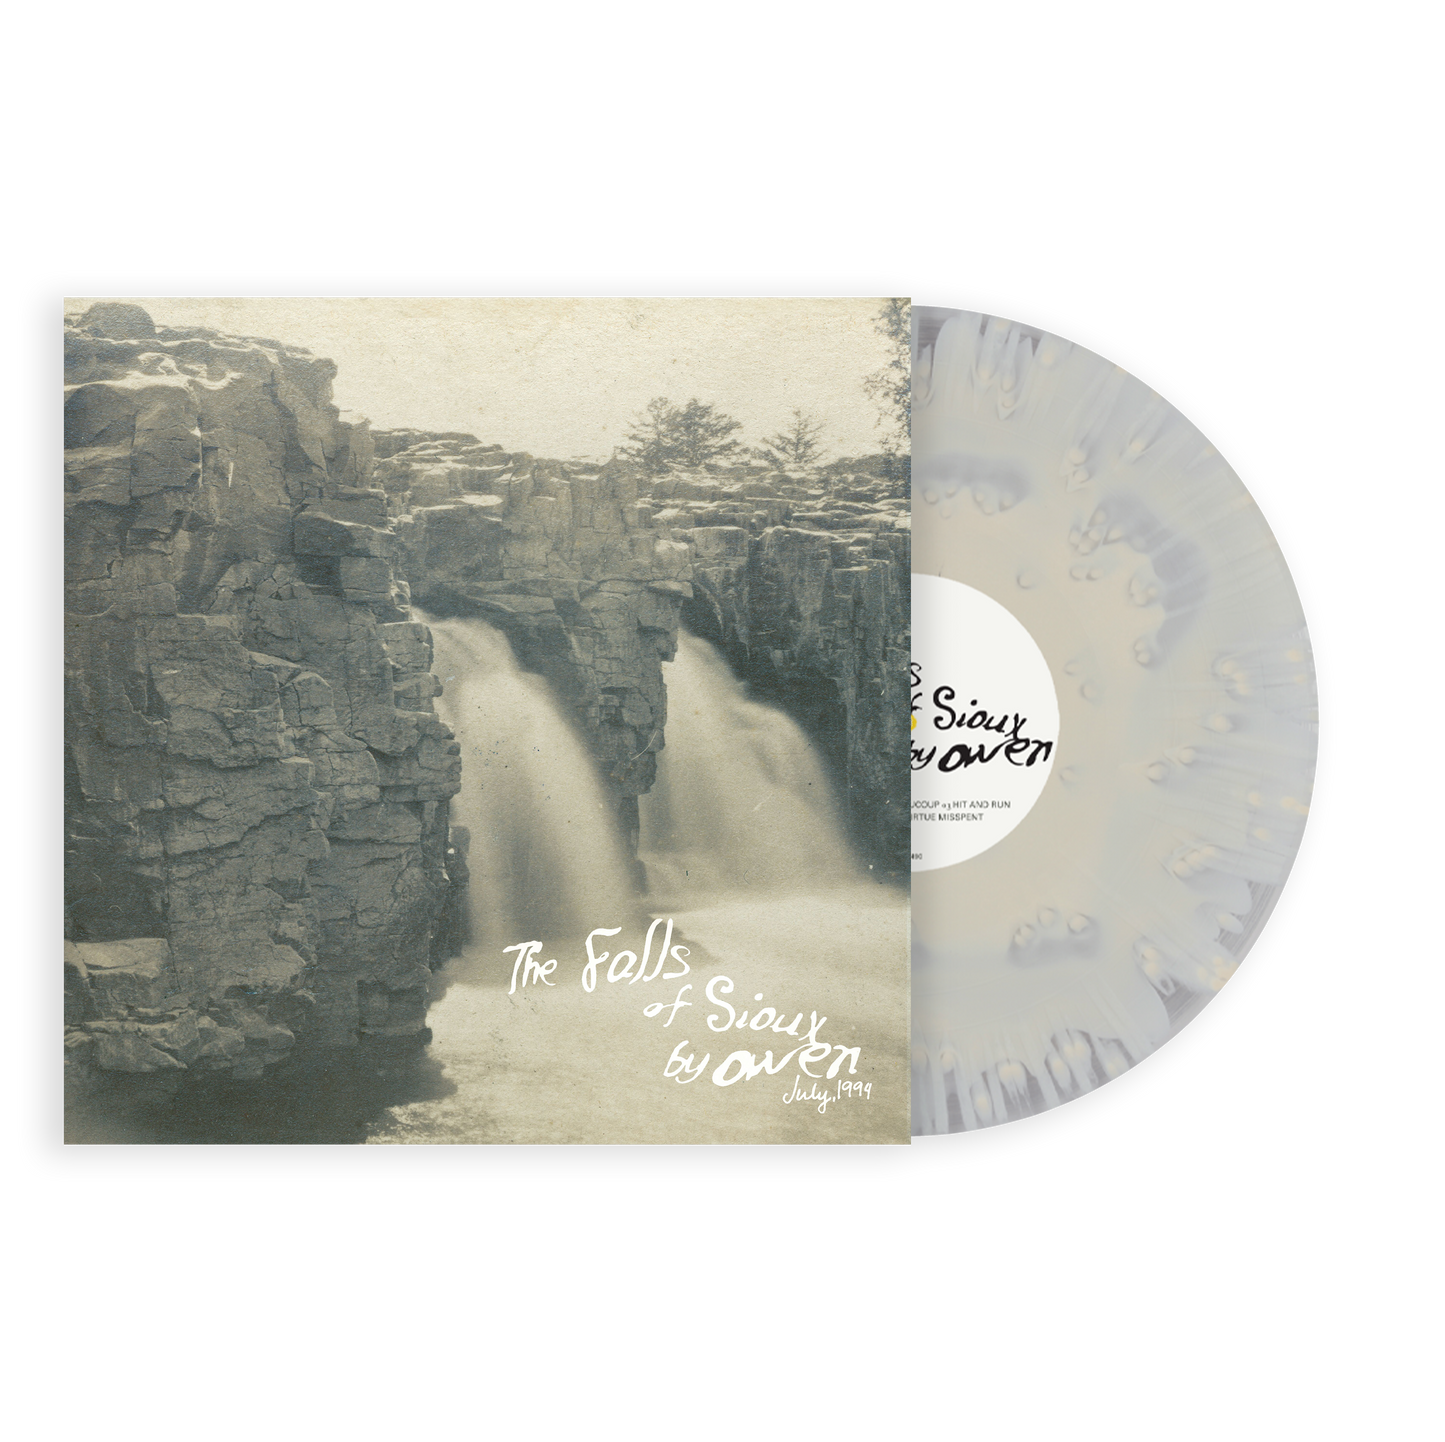 Owen "The Falls Of Sioux" LP